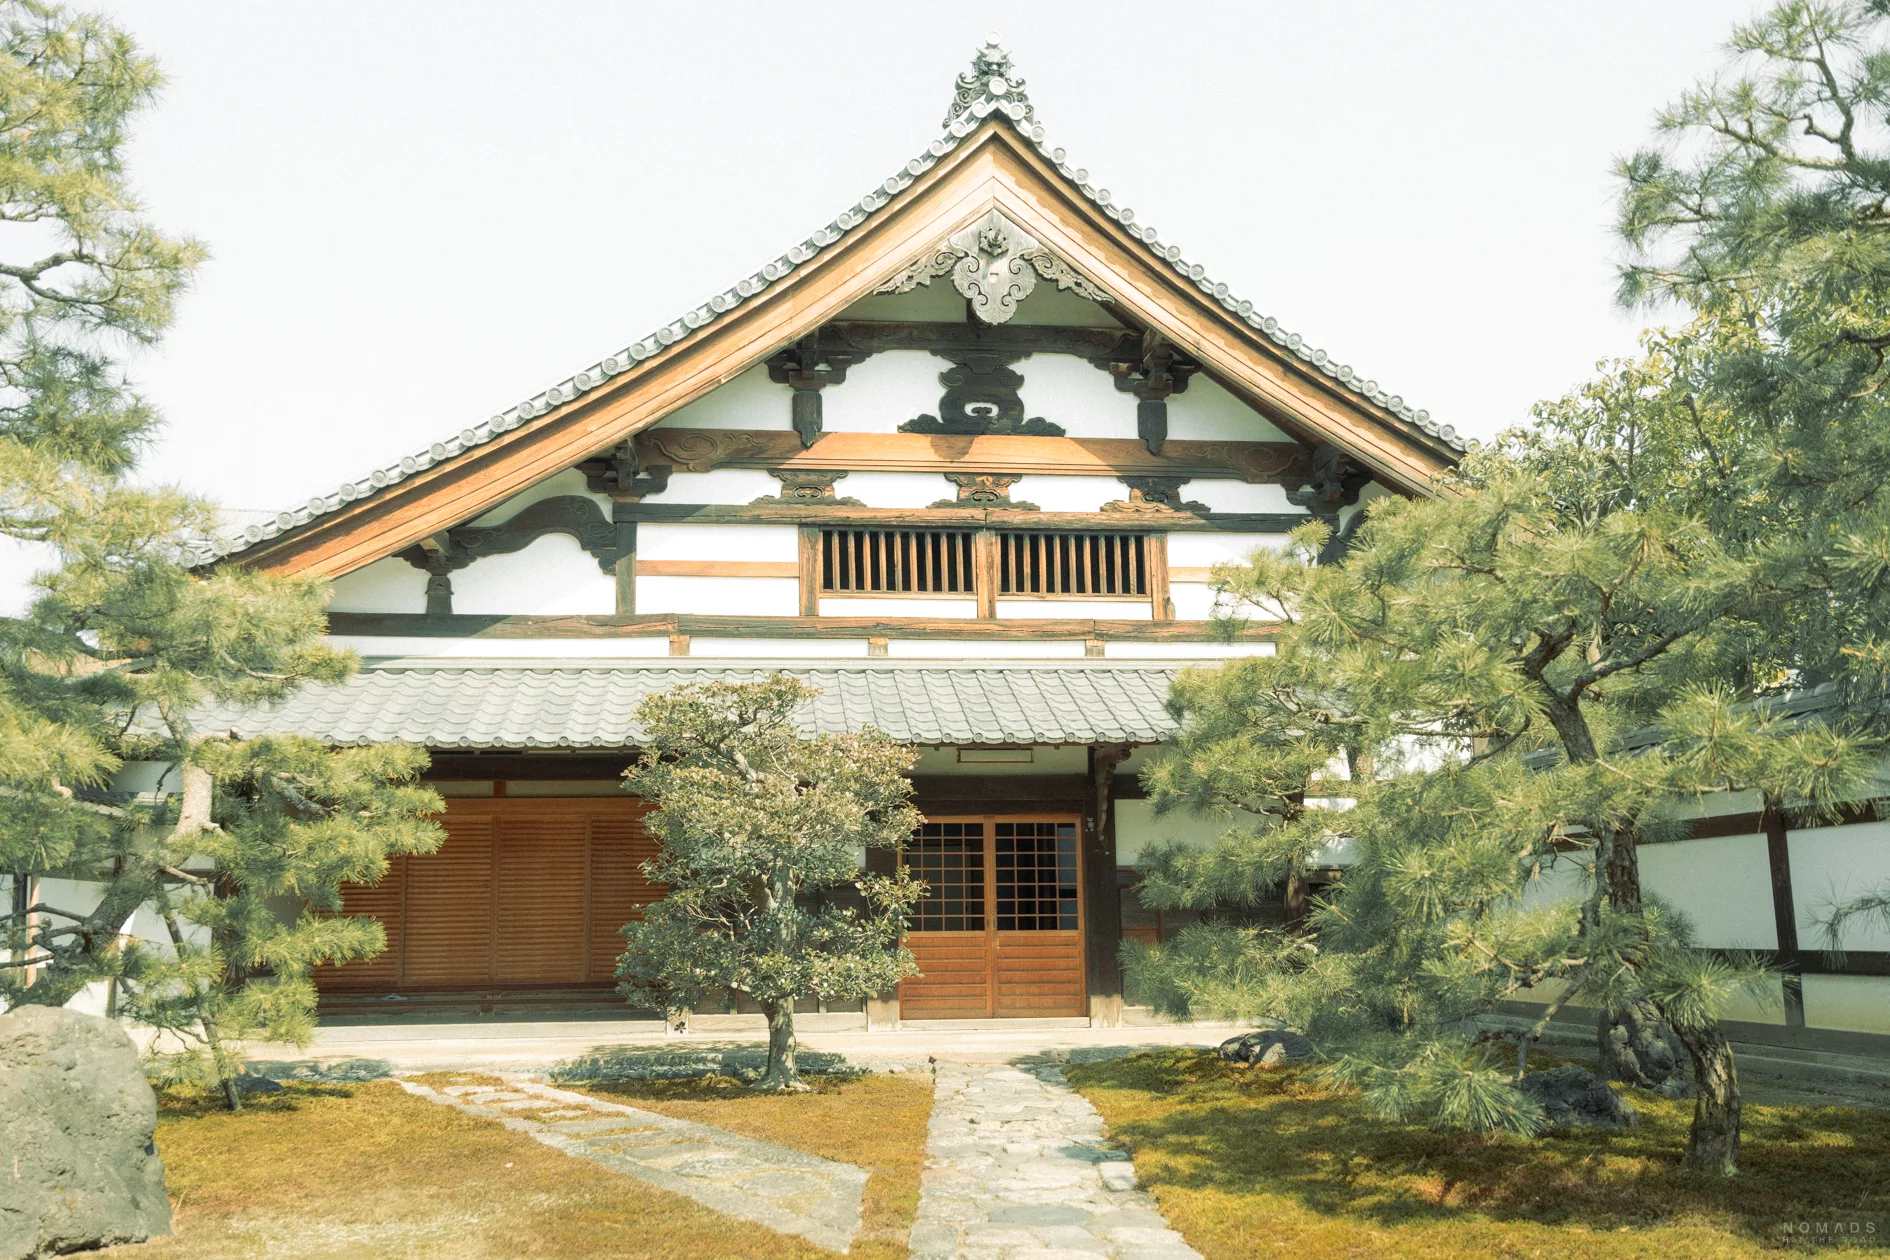 Traditionelle Architektur in Kyoto Japan